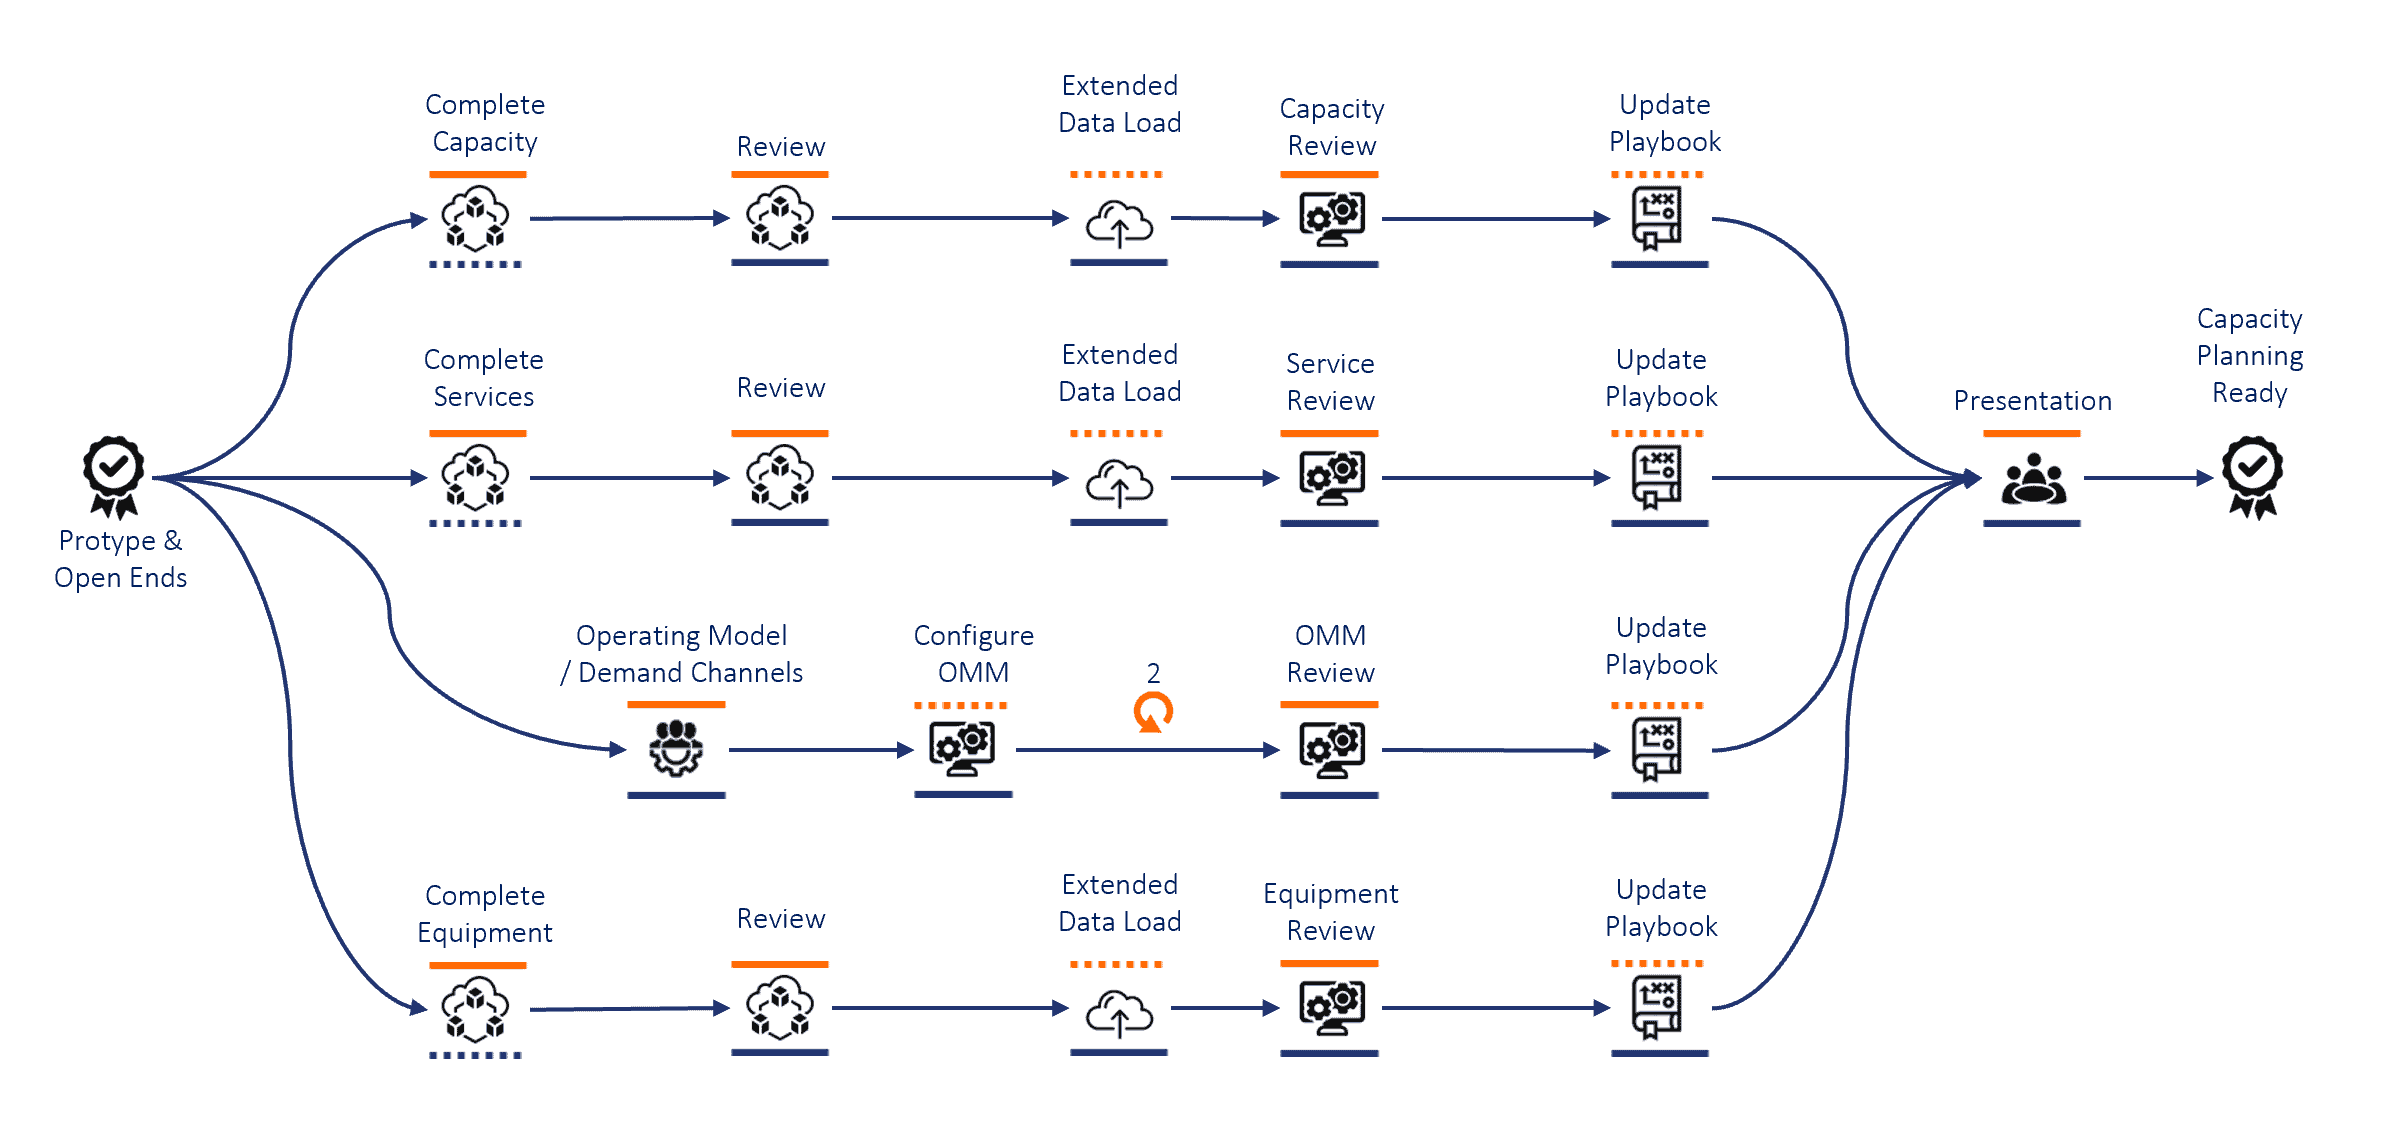 Binocs implementation with the “prêt à porter” agile playbook